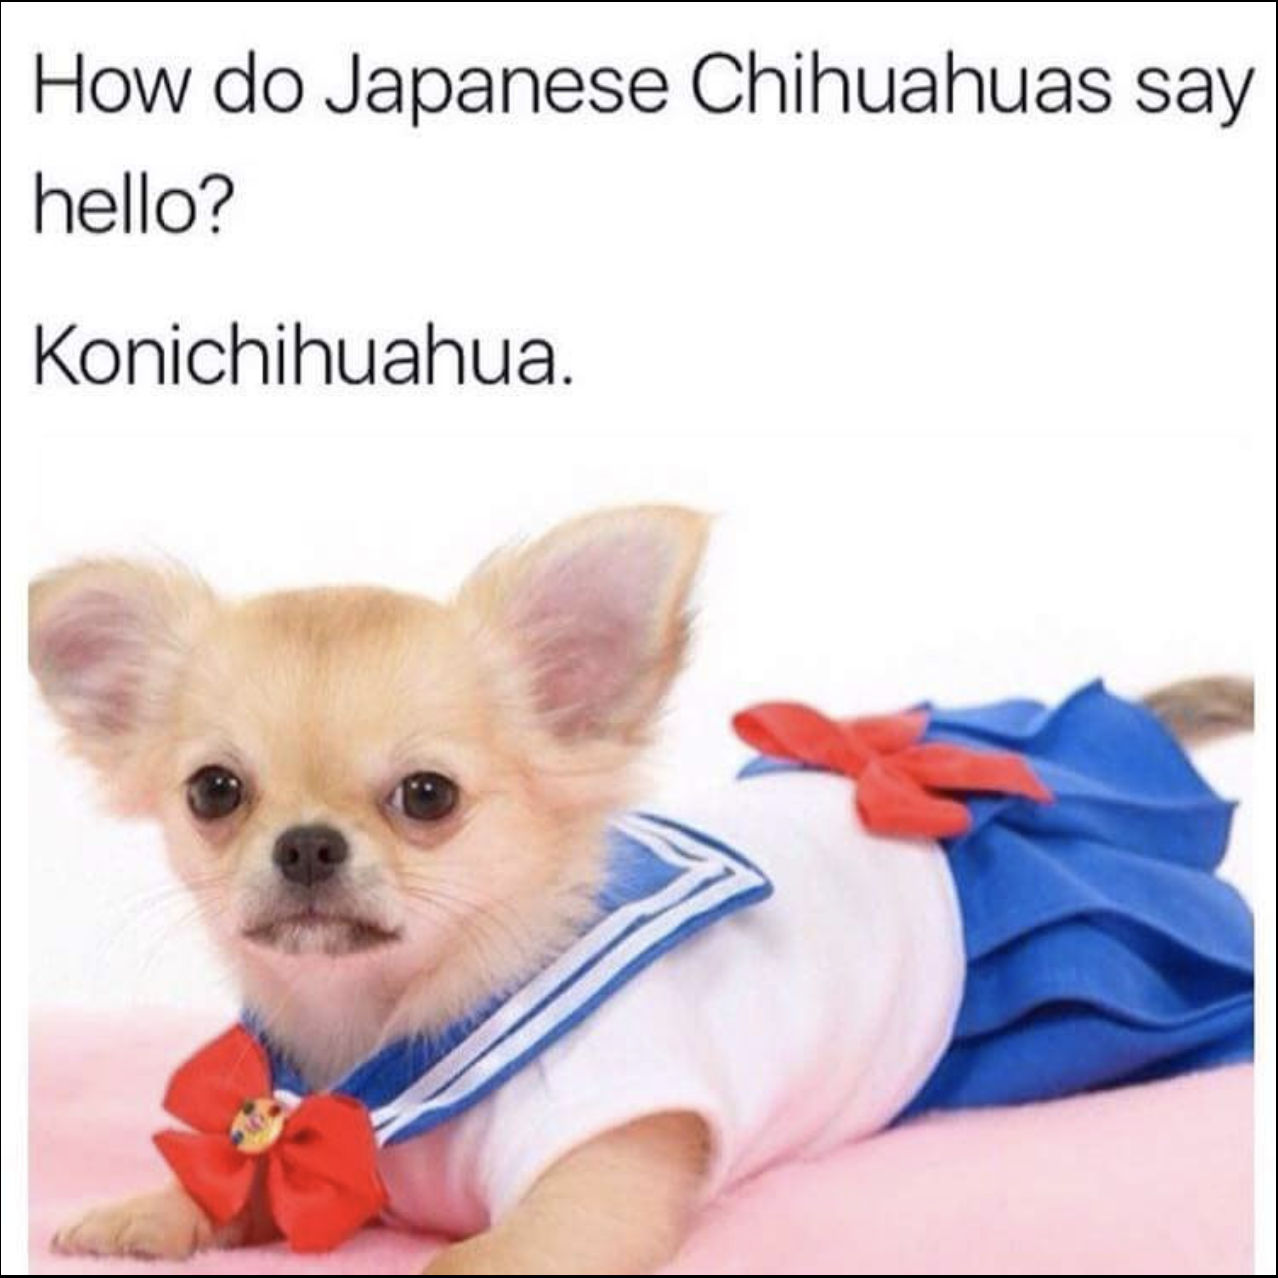 do japanese dogs say hello - How do Japanese Chihuahuas say hello? Konichihuahua